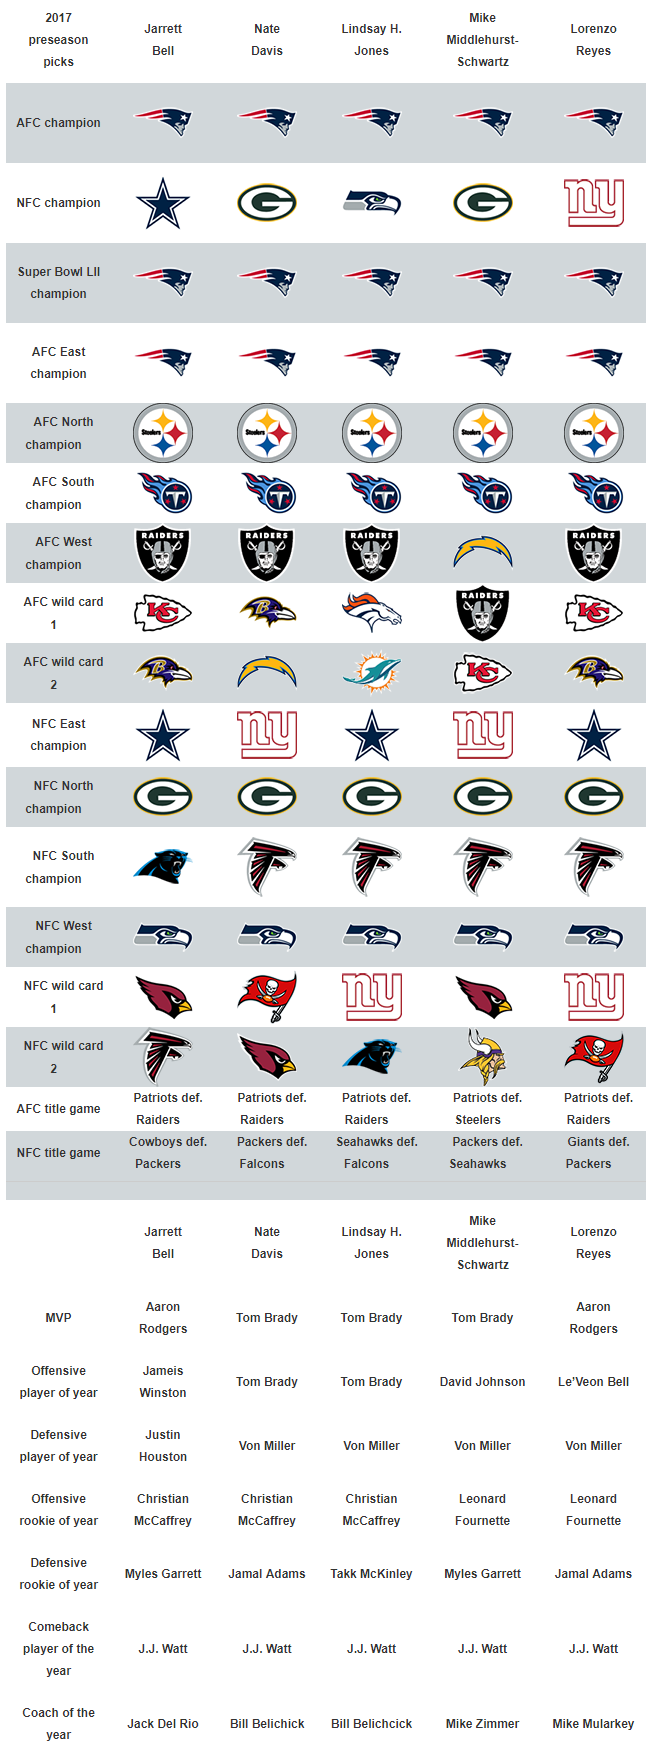 USA TODAY Sports' 2017 NFL predictions: Patriots will win Super Bowl